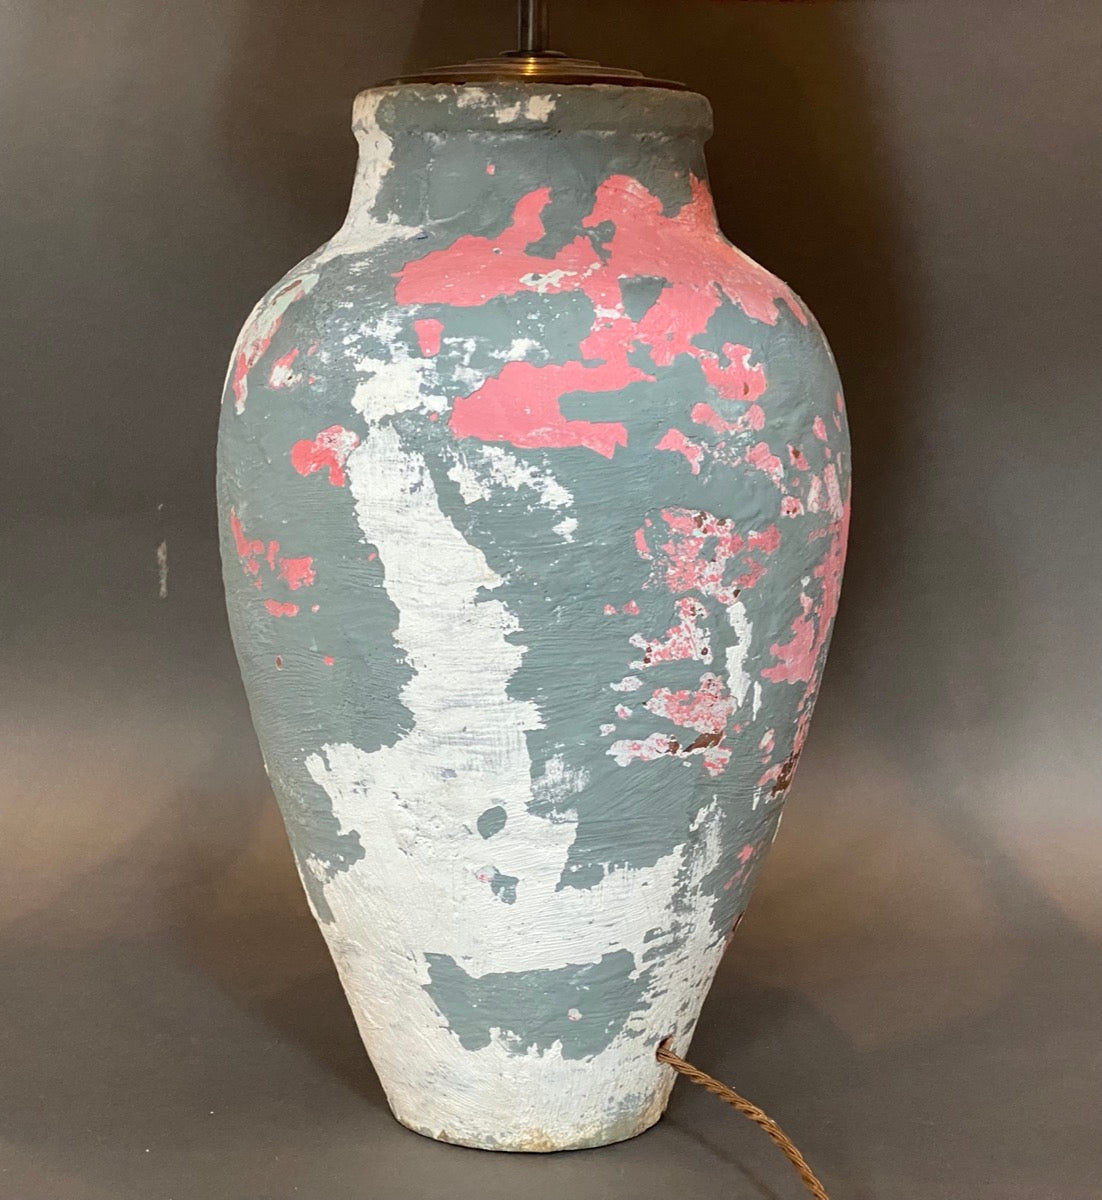 Pink and grey Turkish pot lamp base